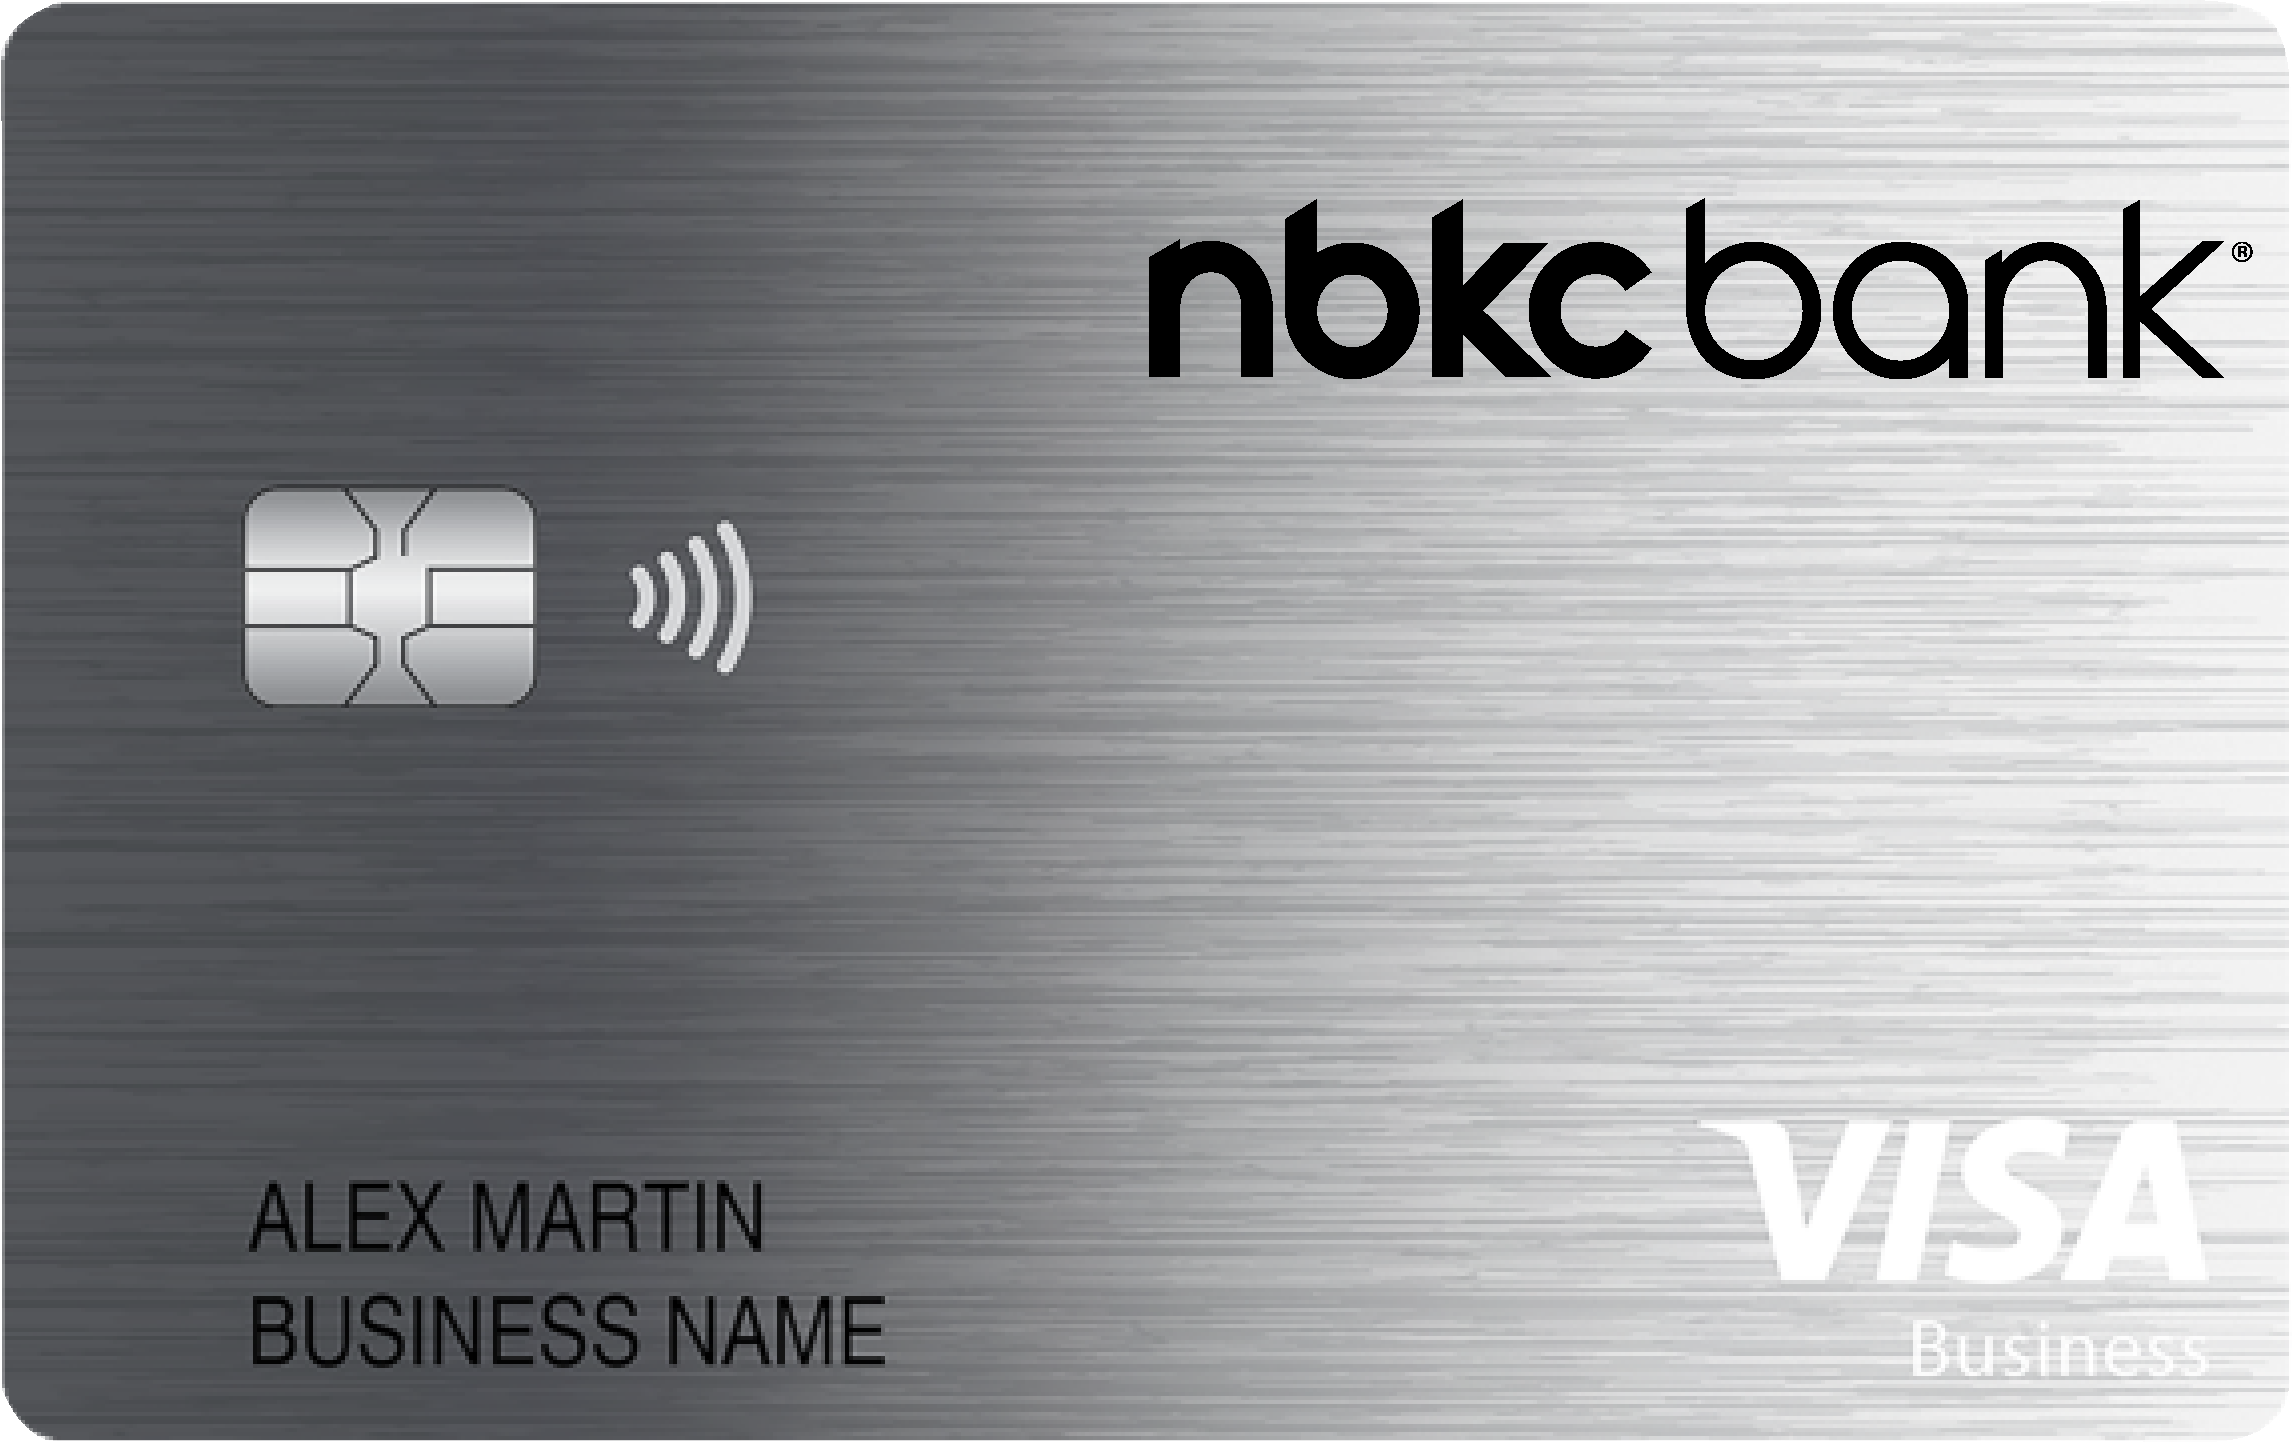 NBKC Bank Business Real Rewards Card